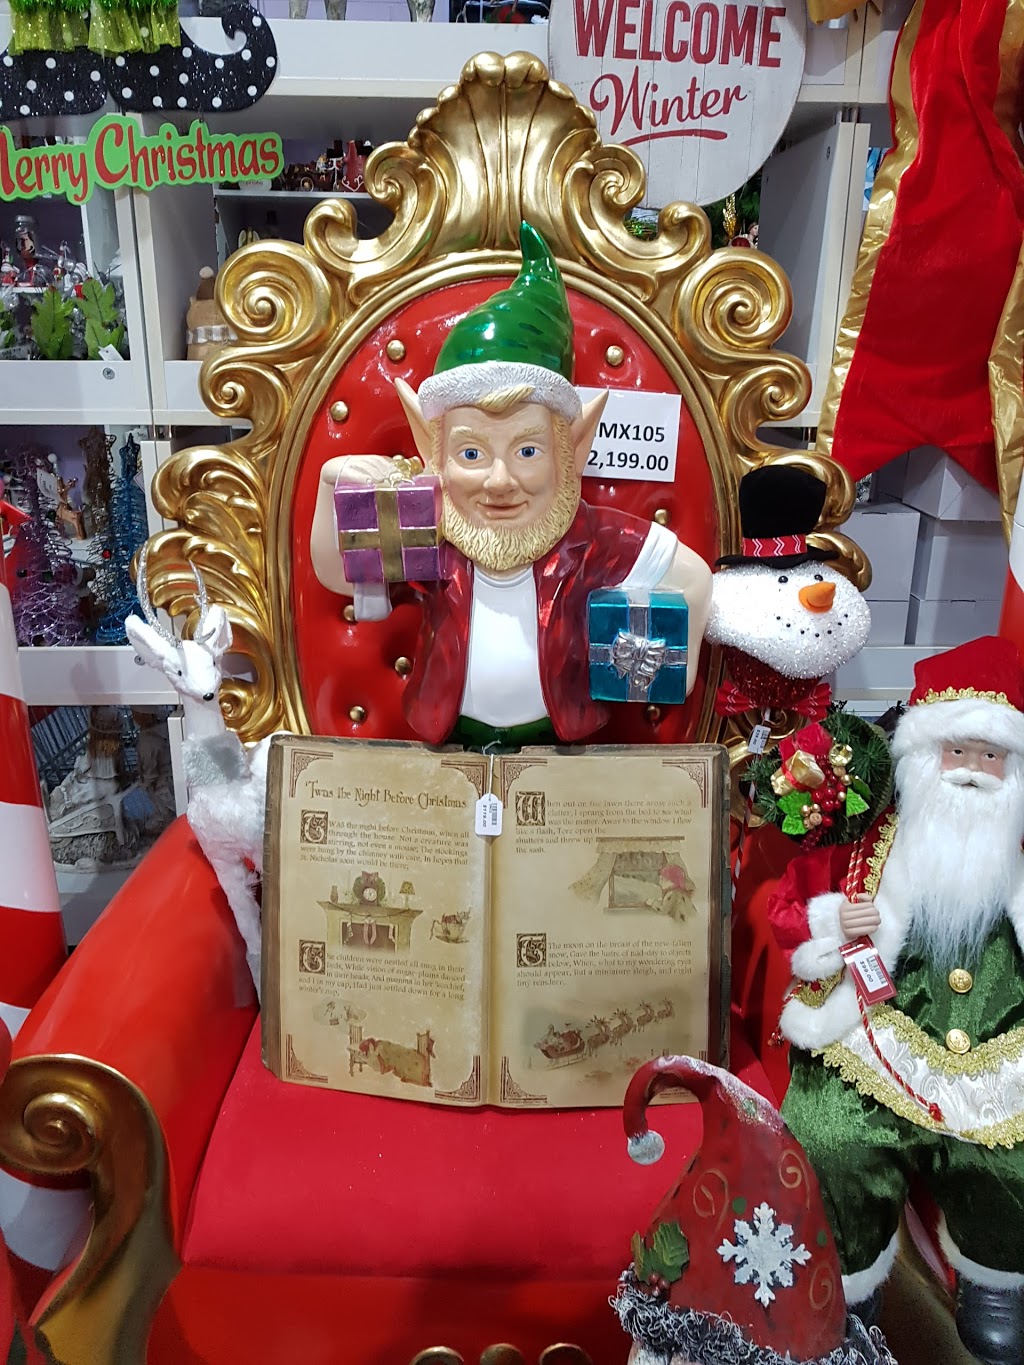 Christmas 4 You | store | 146 Cheltenham Rd, Dandenong VIC 3175, Australia | 0397937575 OR +61 3 9793 7575